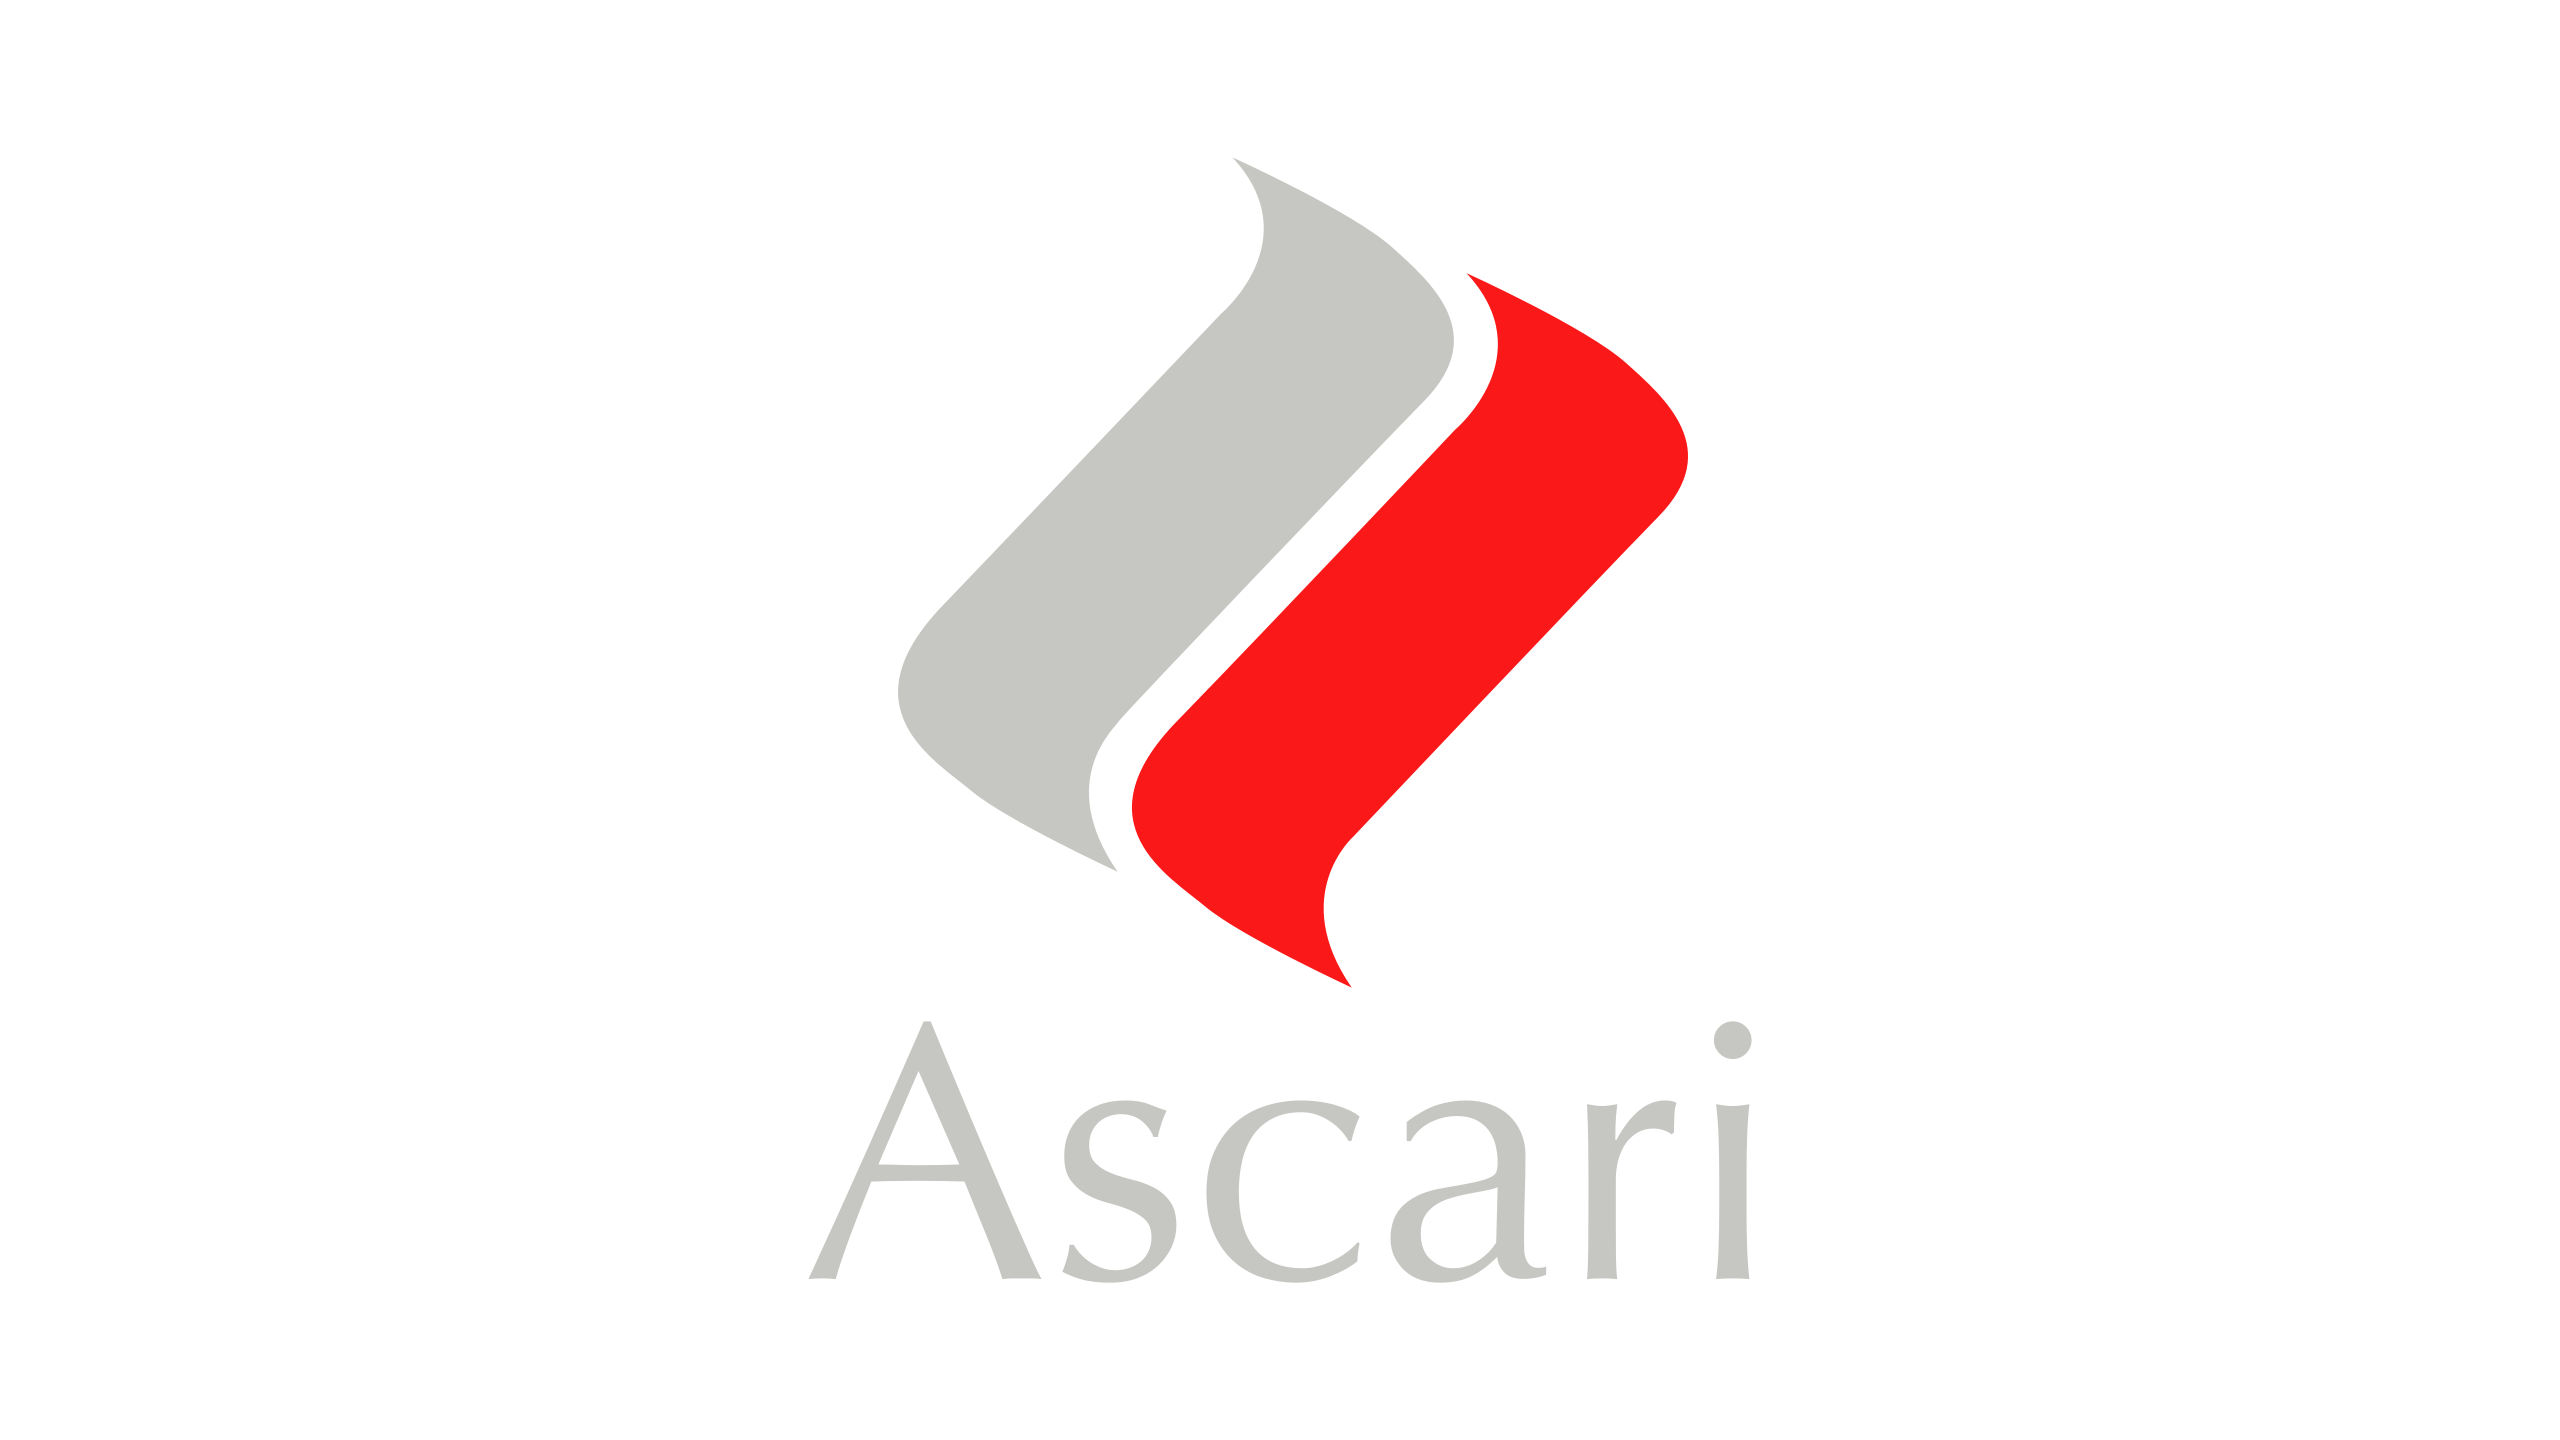 Ascari Logo - Ascari Logo, HD Png, Information